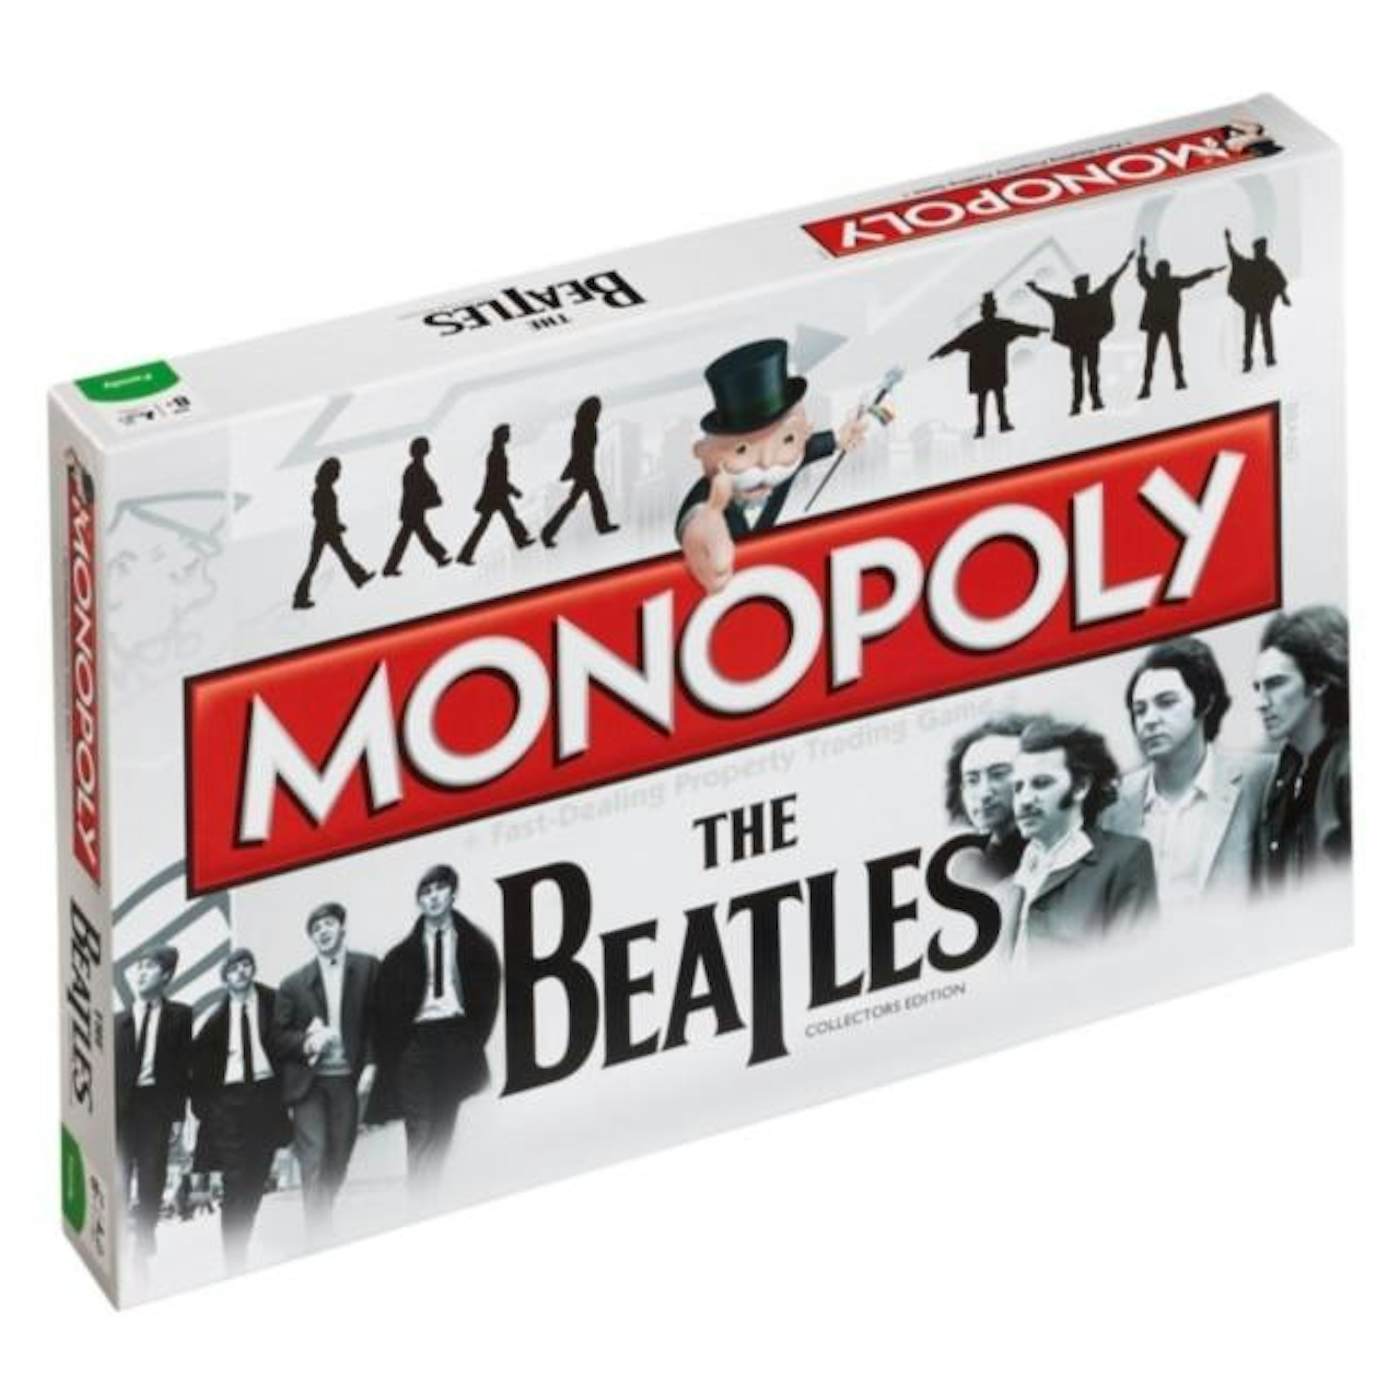 The Beatles Monopoly